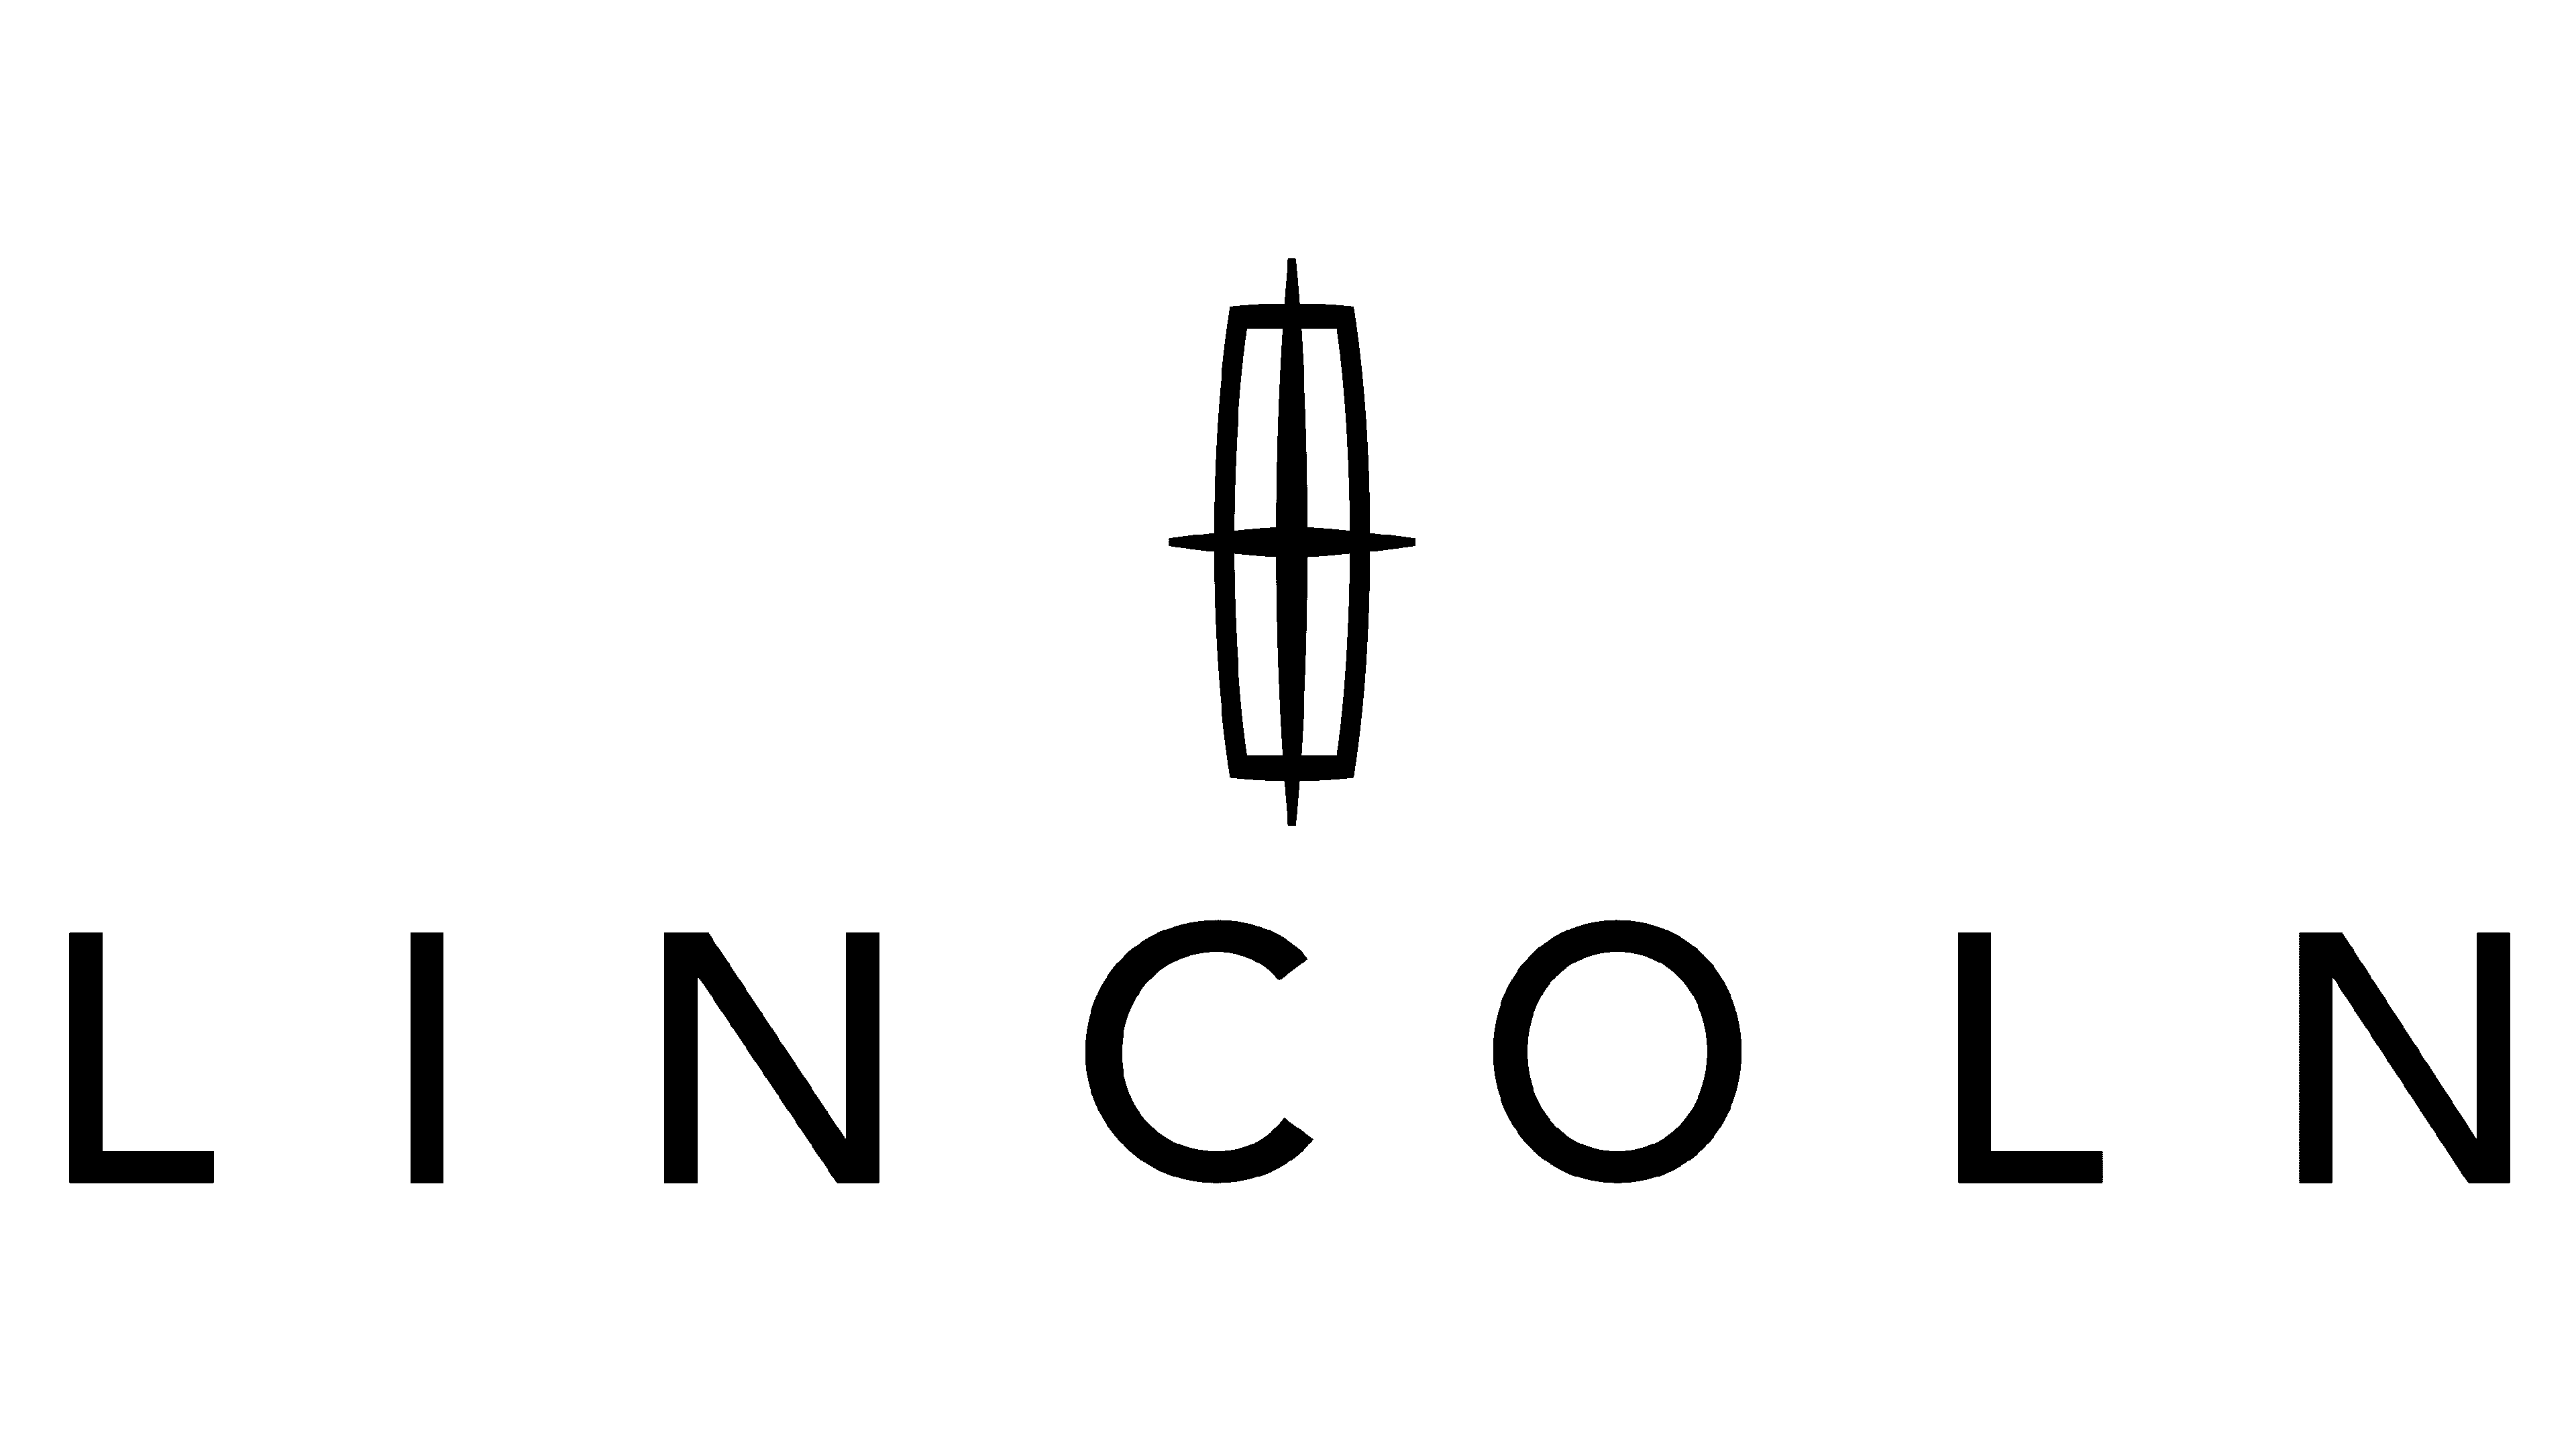 Lincoln Motor Company Logo History | Motor Informations